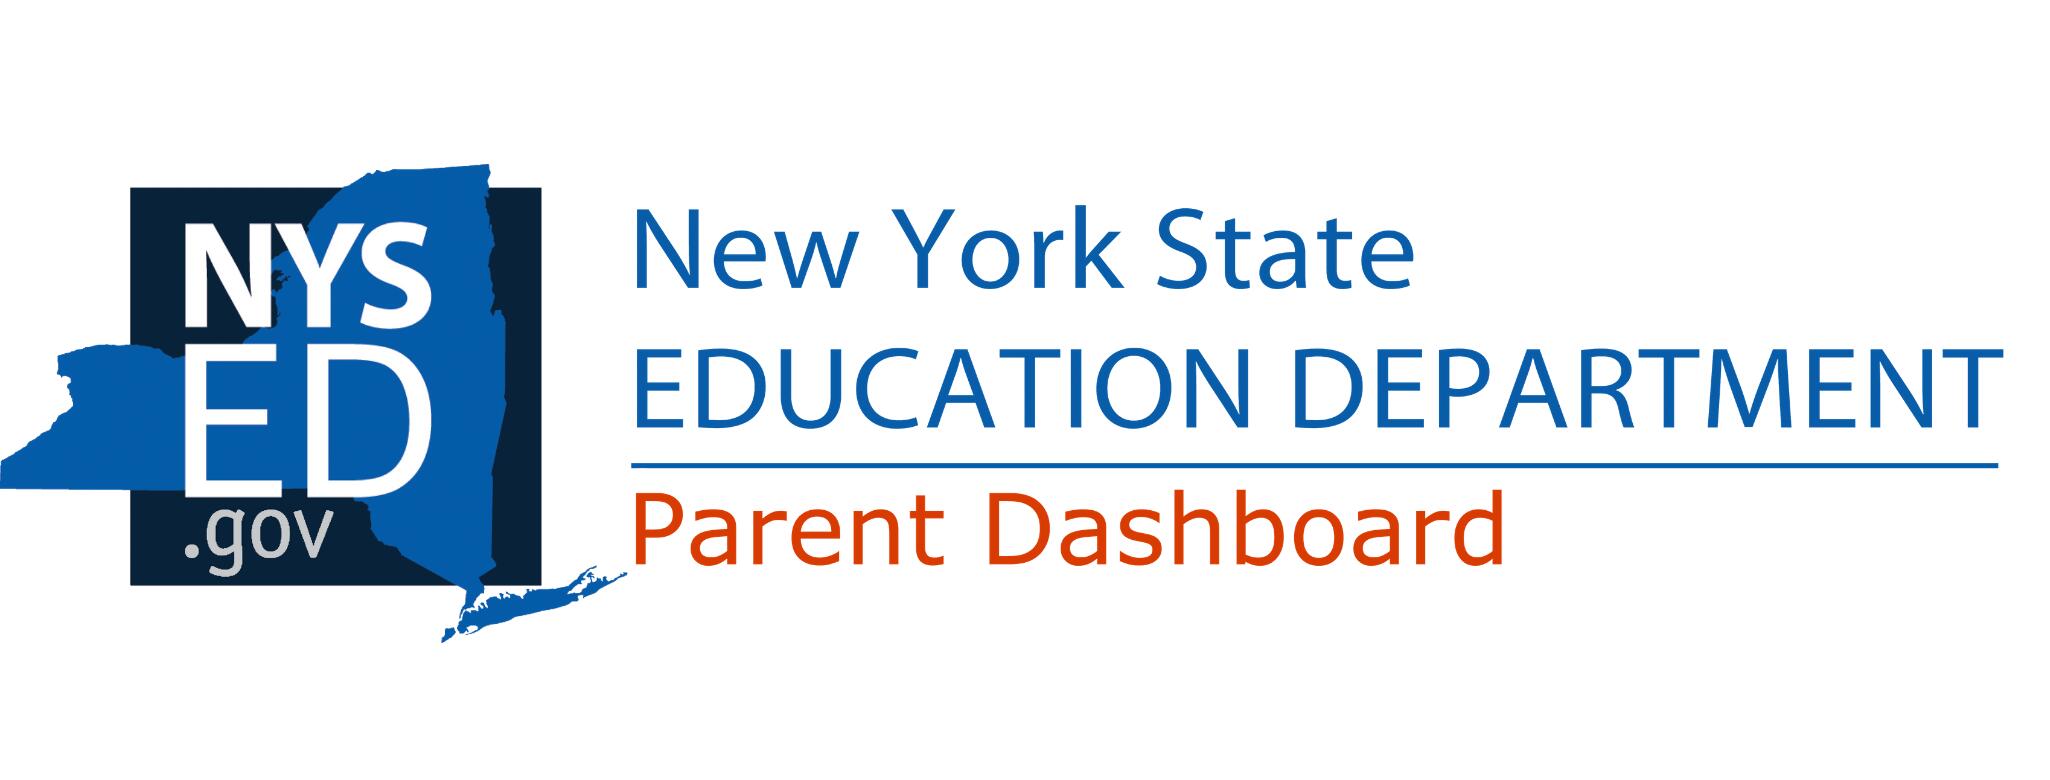 parent dashboard logo